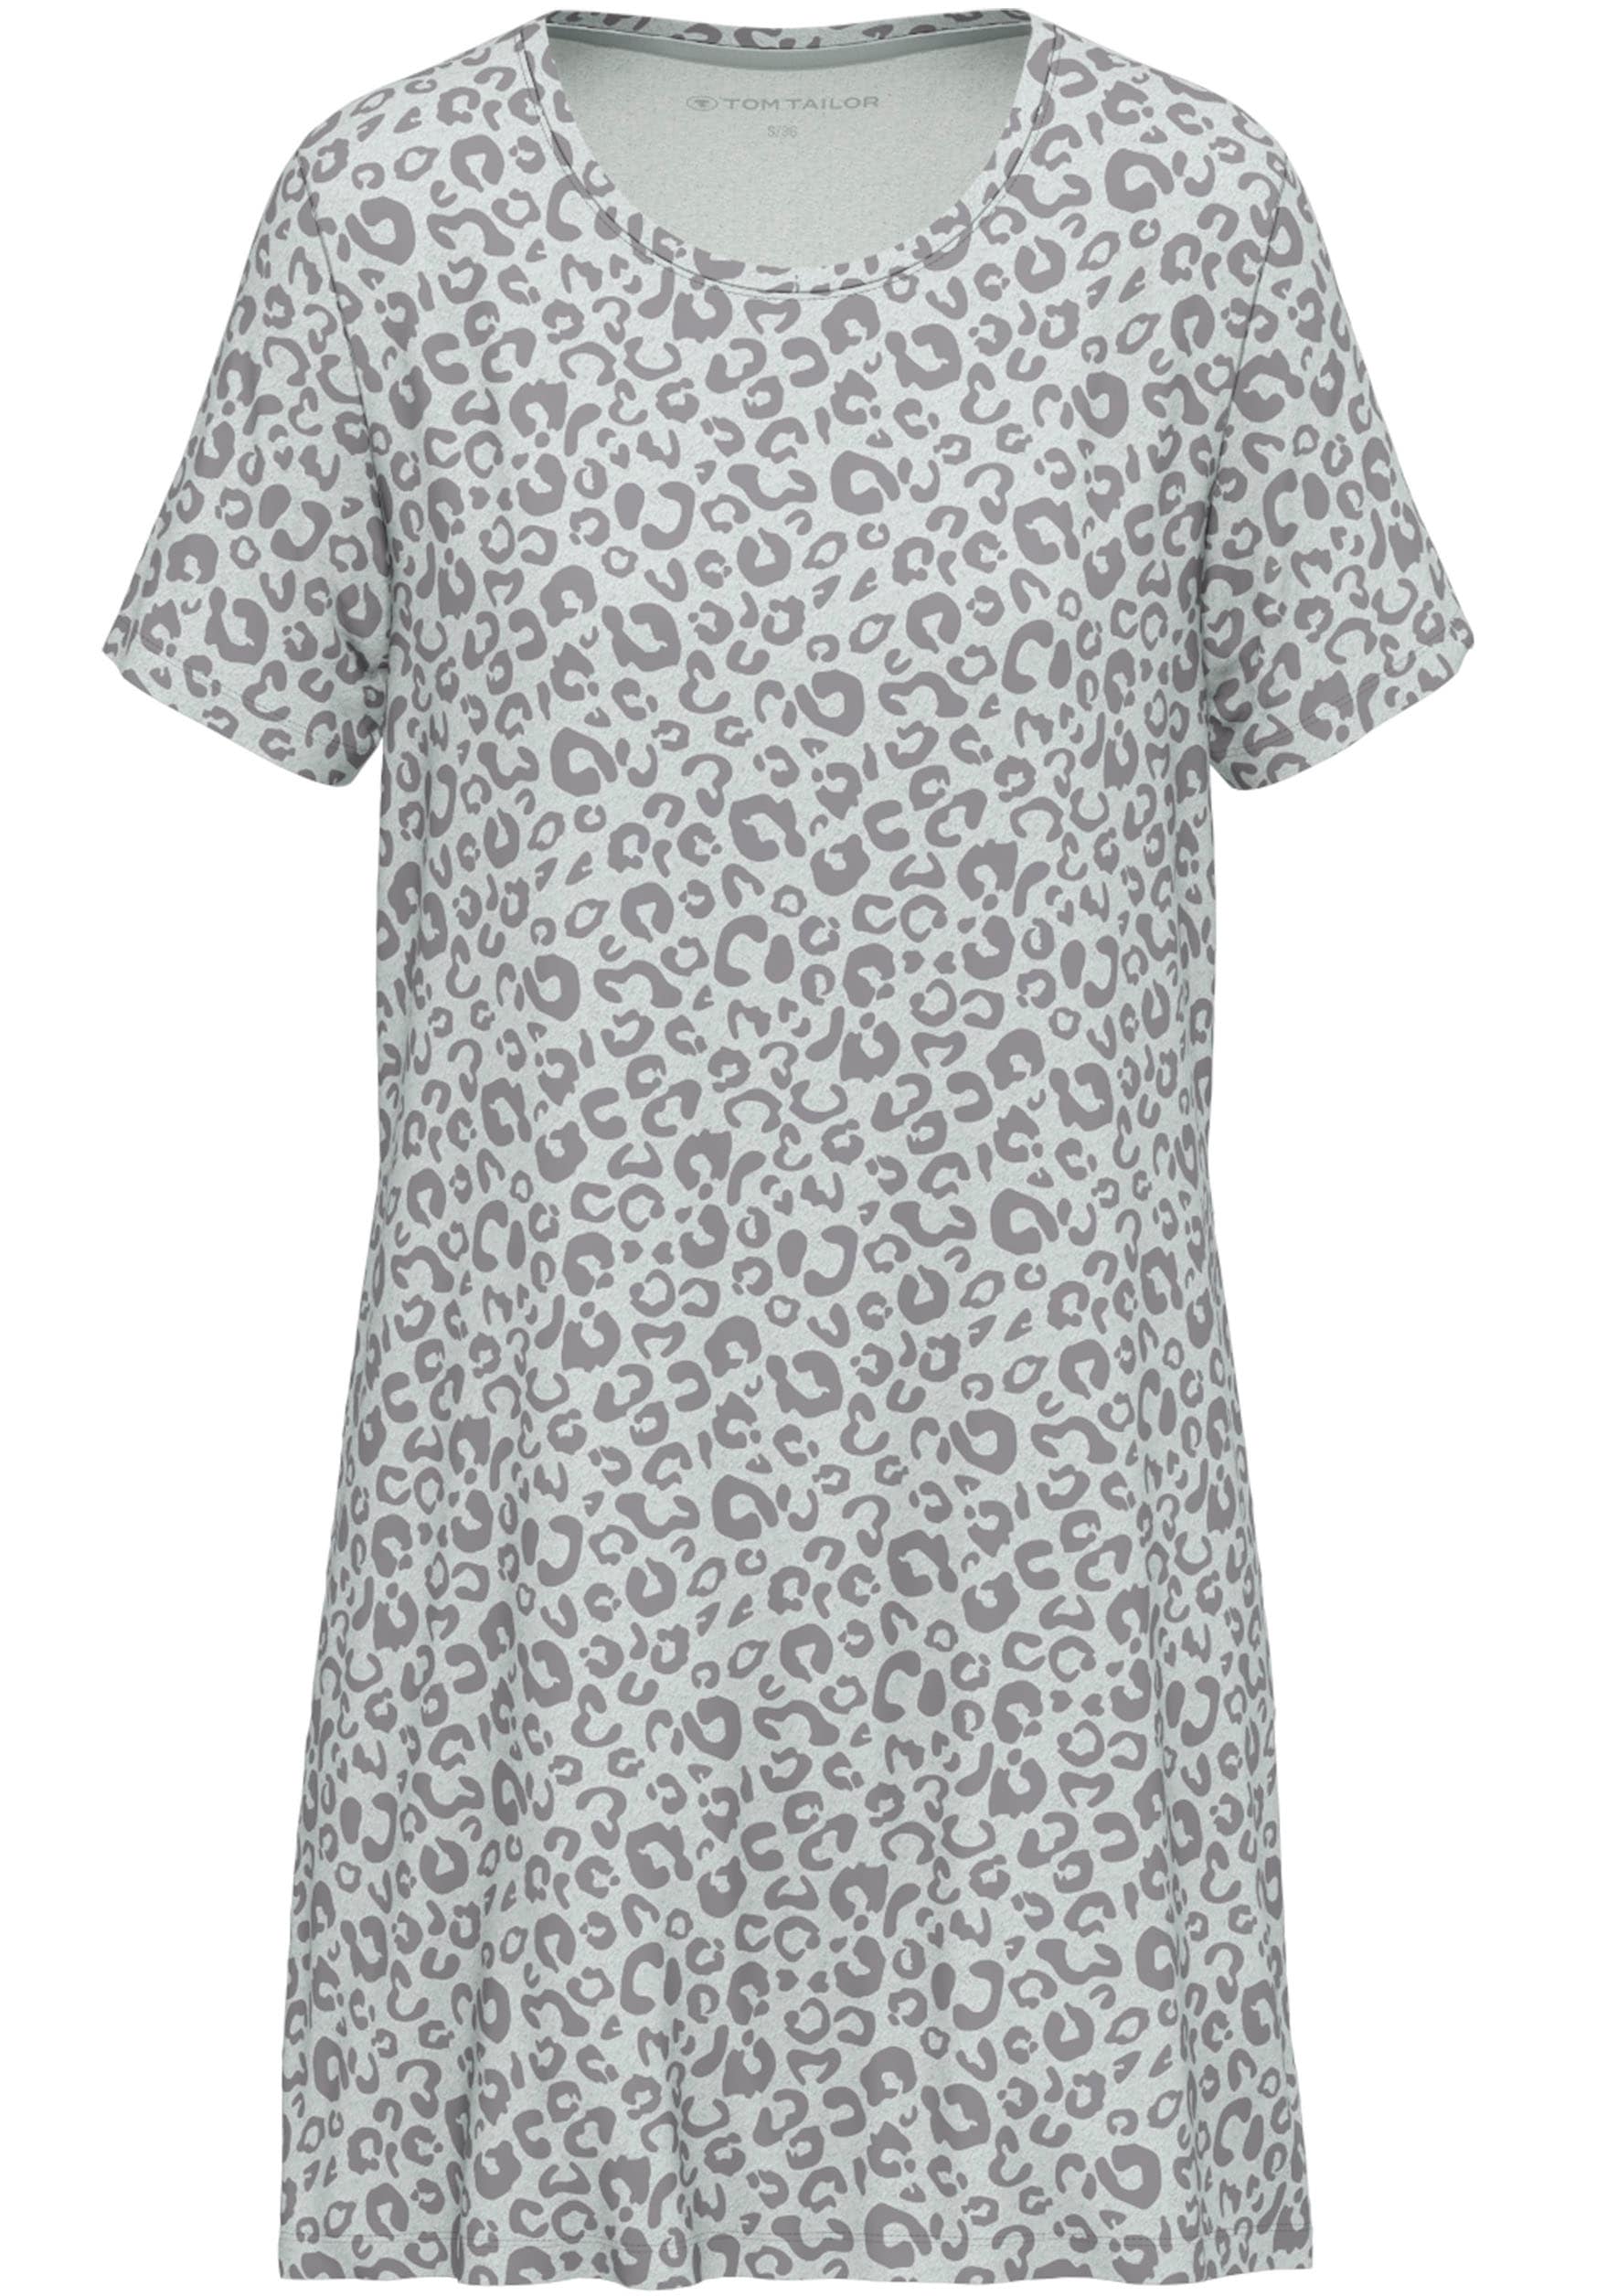 TOM TAILOR Nachthemd, mit trendy Animal-Print